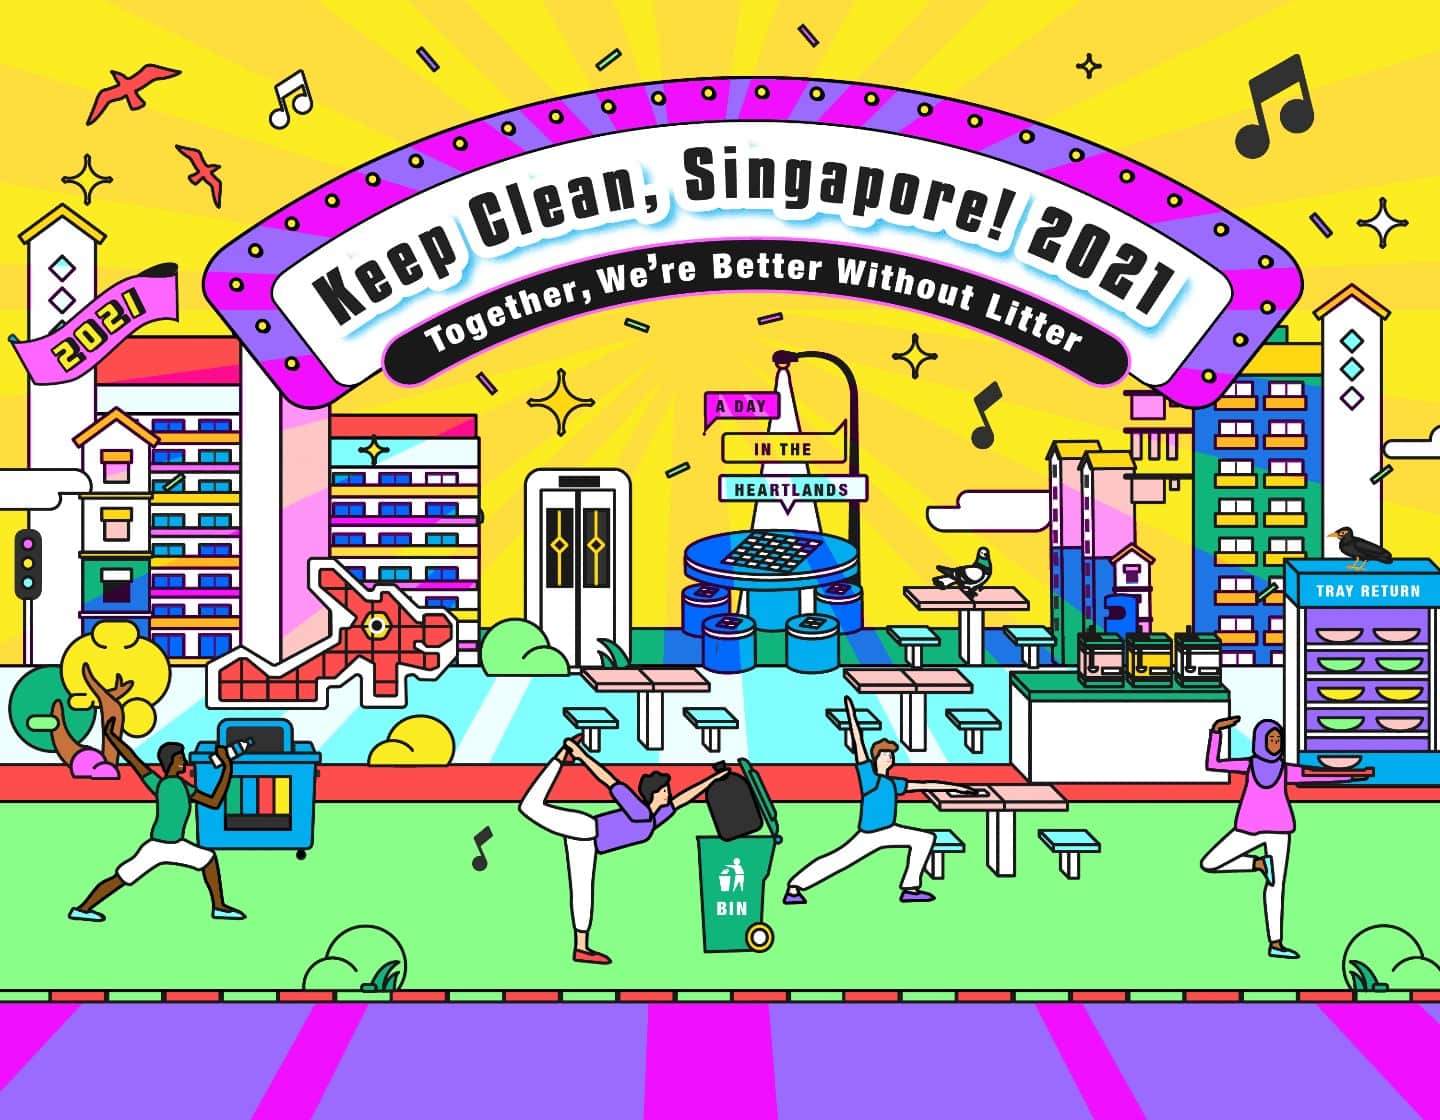 Keep Clean Singapore